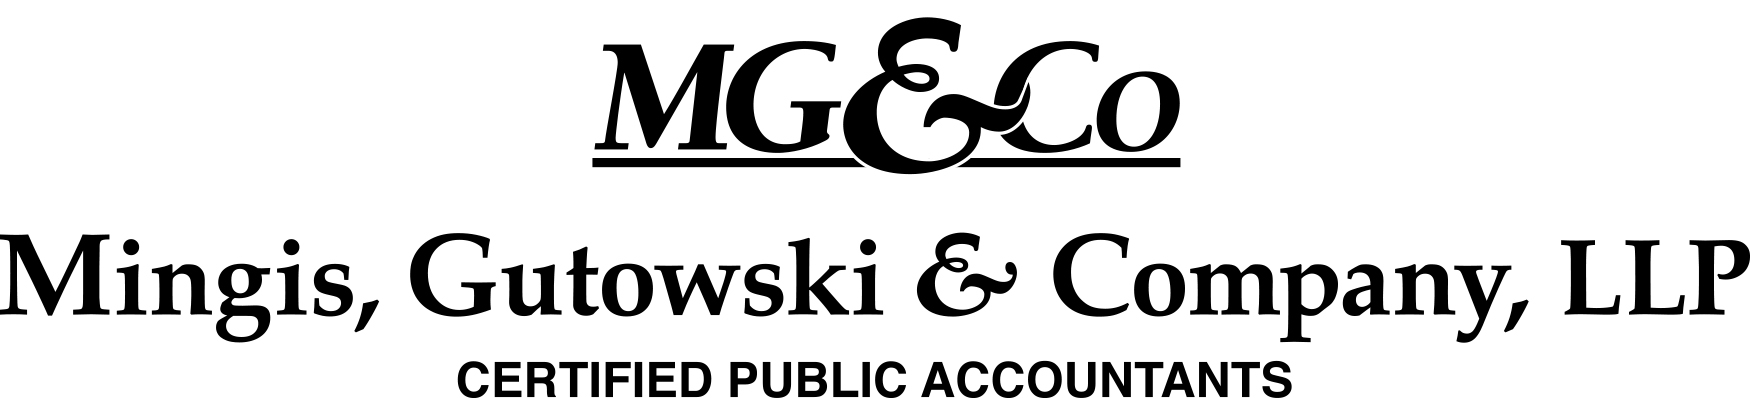 Mingis, Gutowski & Company